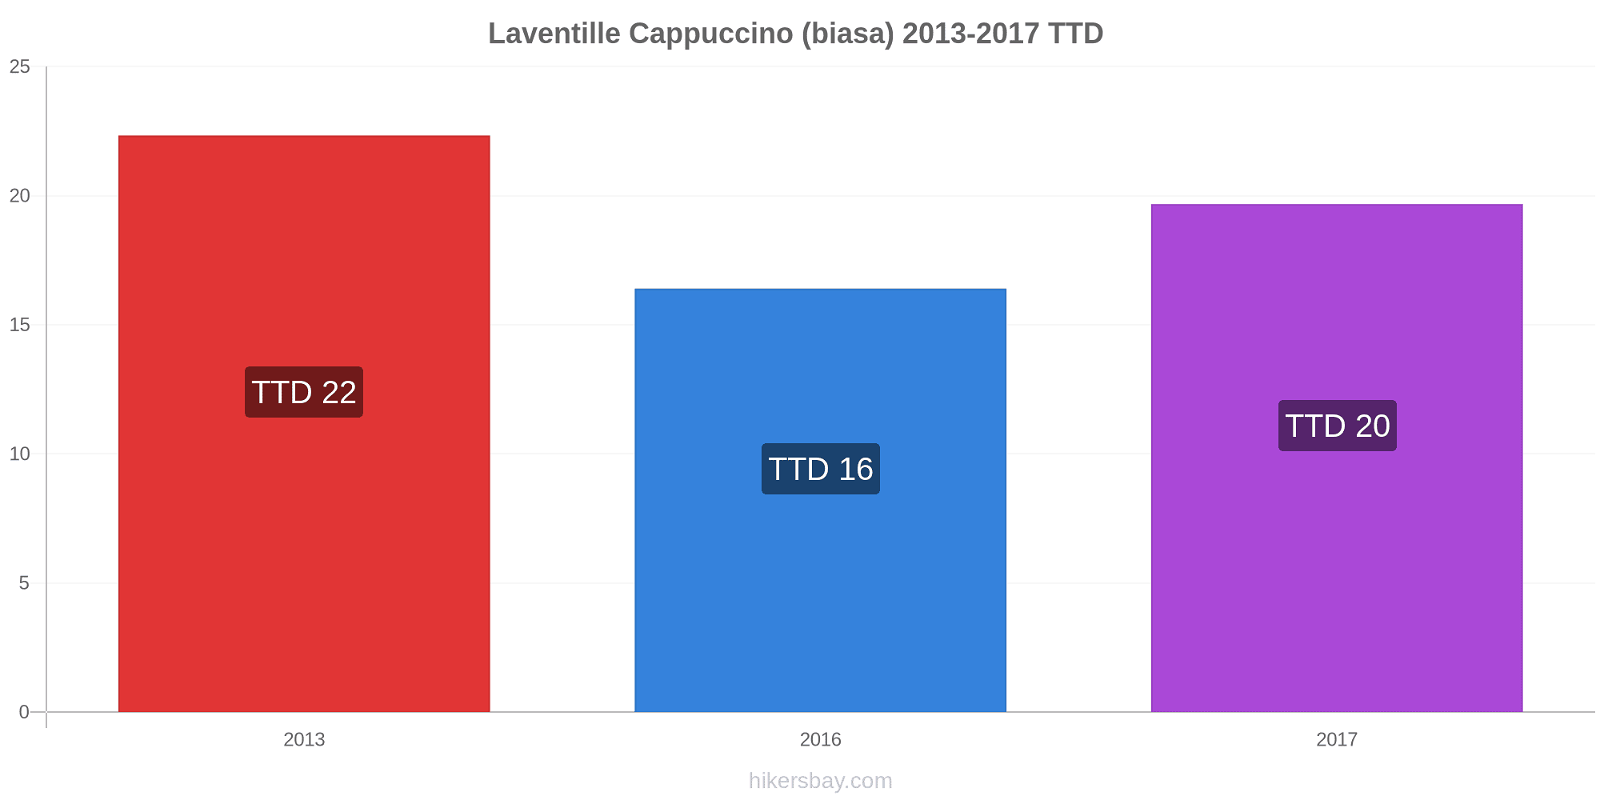 Laventille perubahan harga Cappuccino (biasa) hikersbay.com